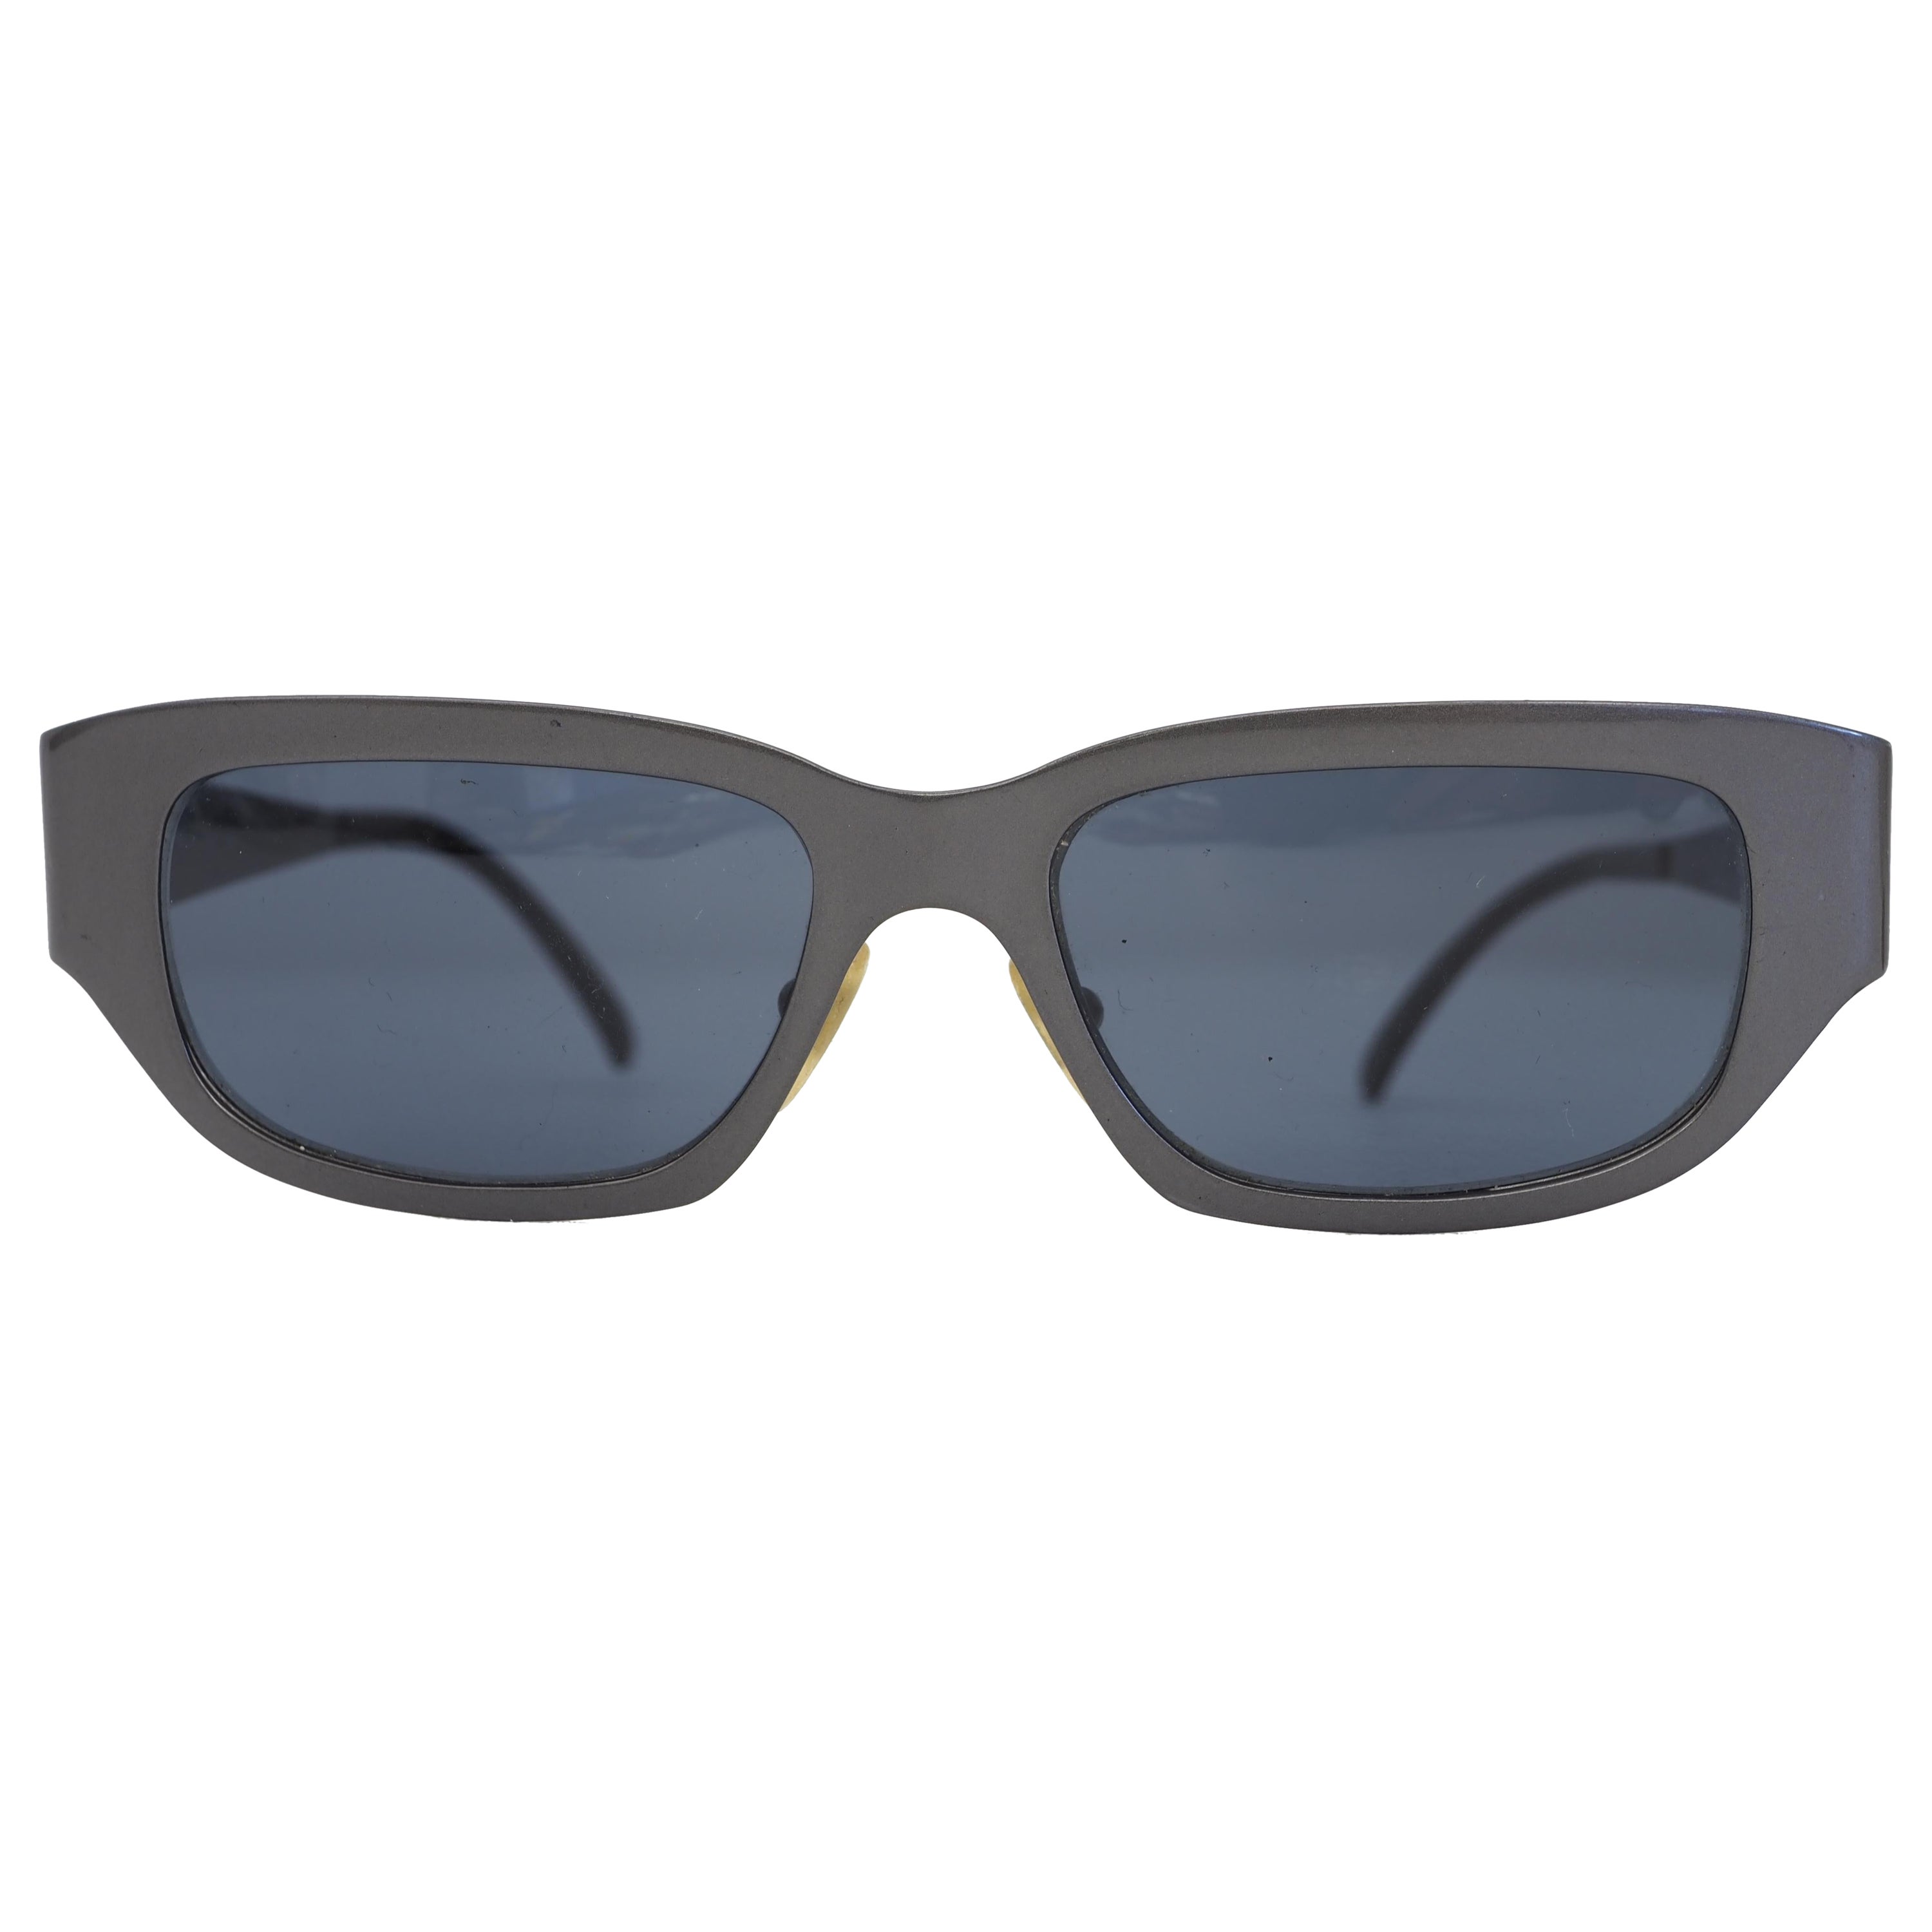 Iceberg grey sunglasses